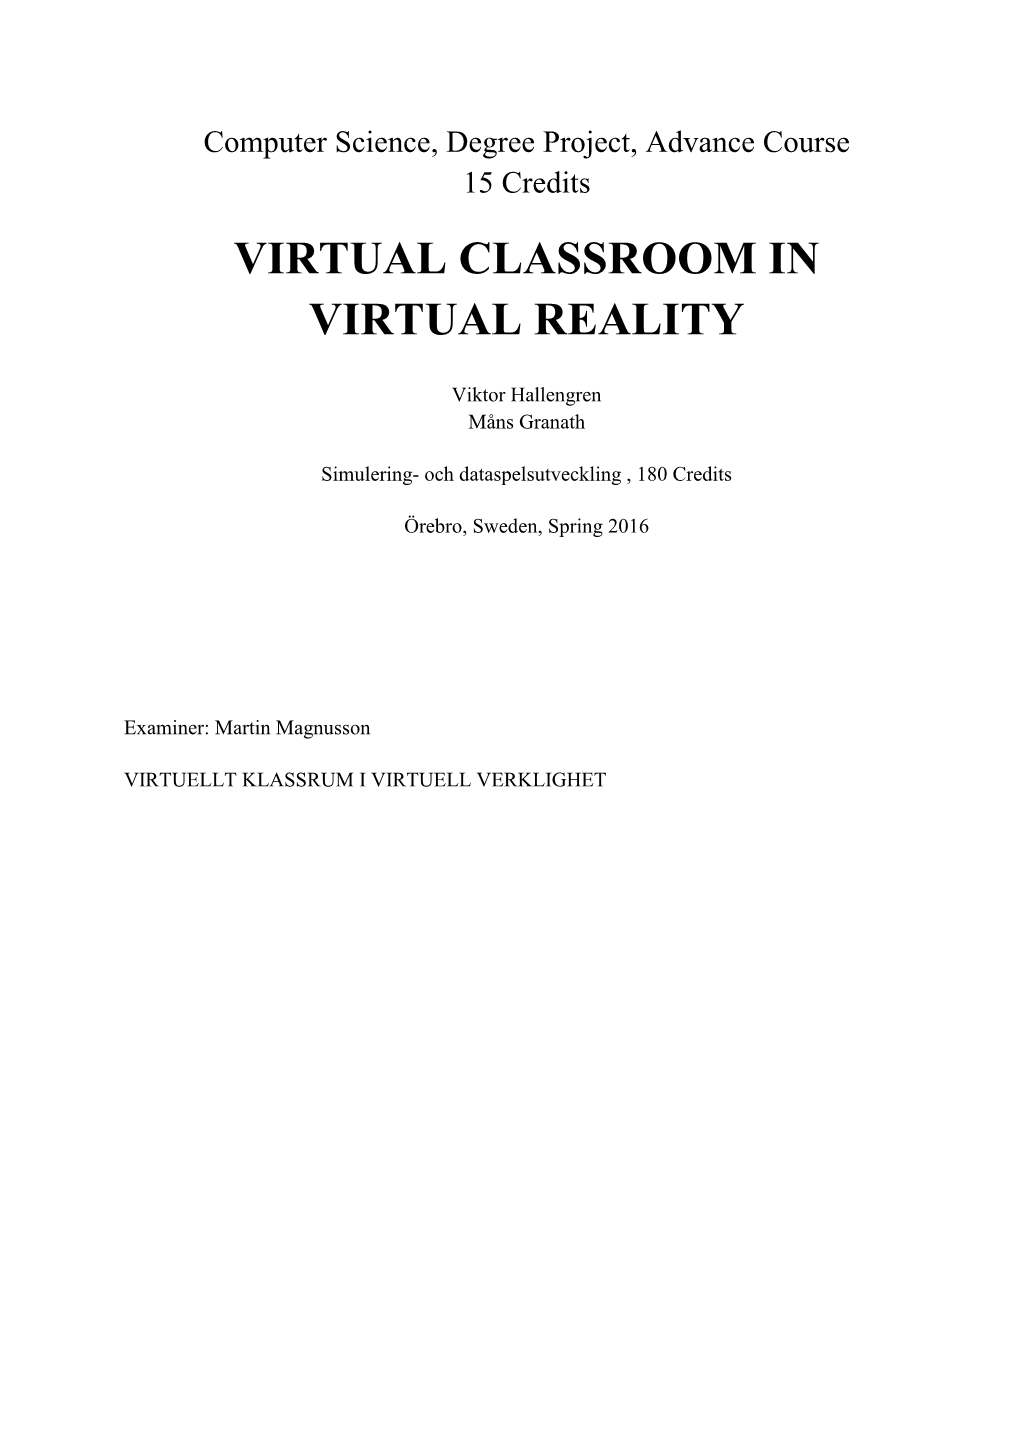 Virtual Classroom in Virtual Reality